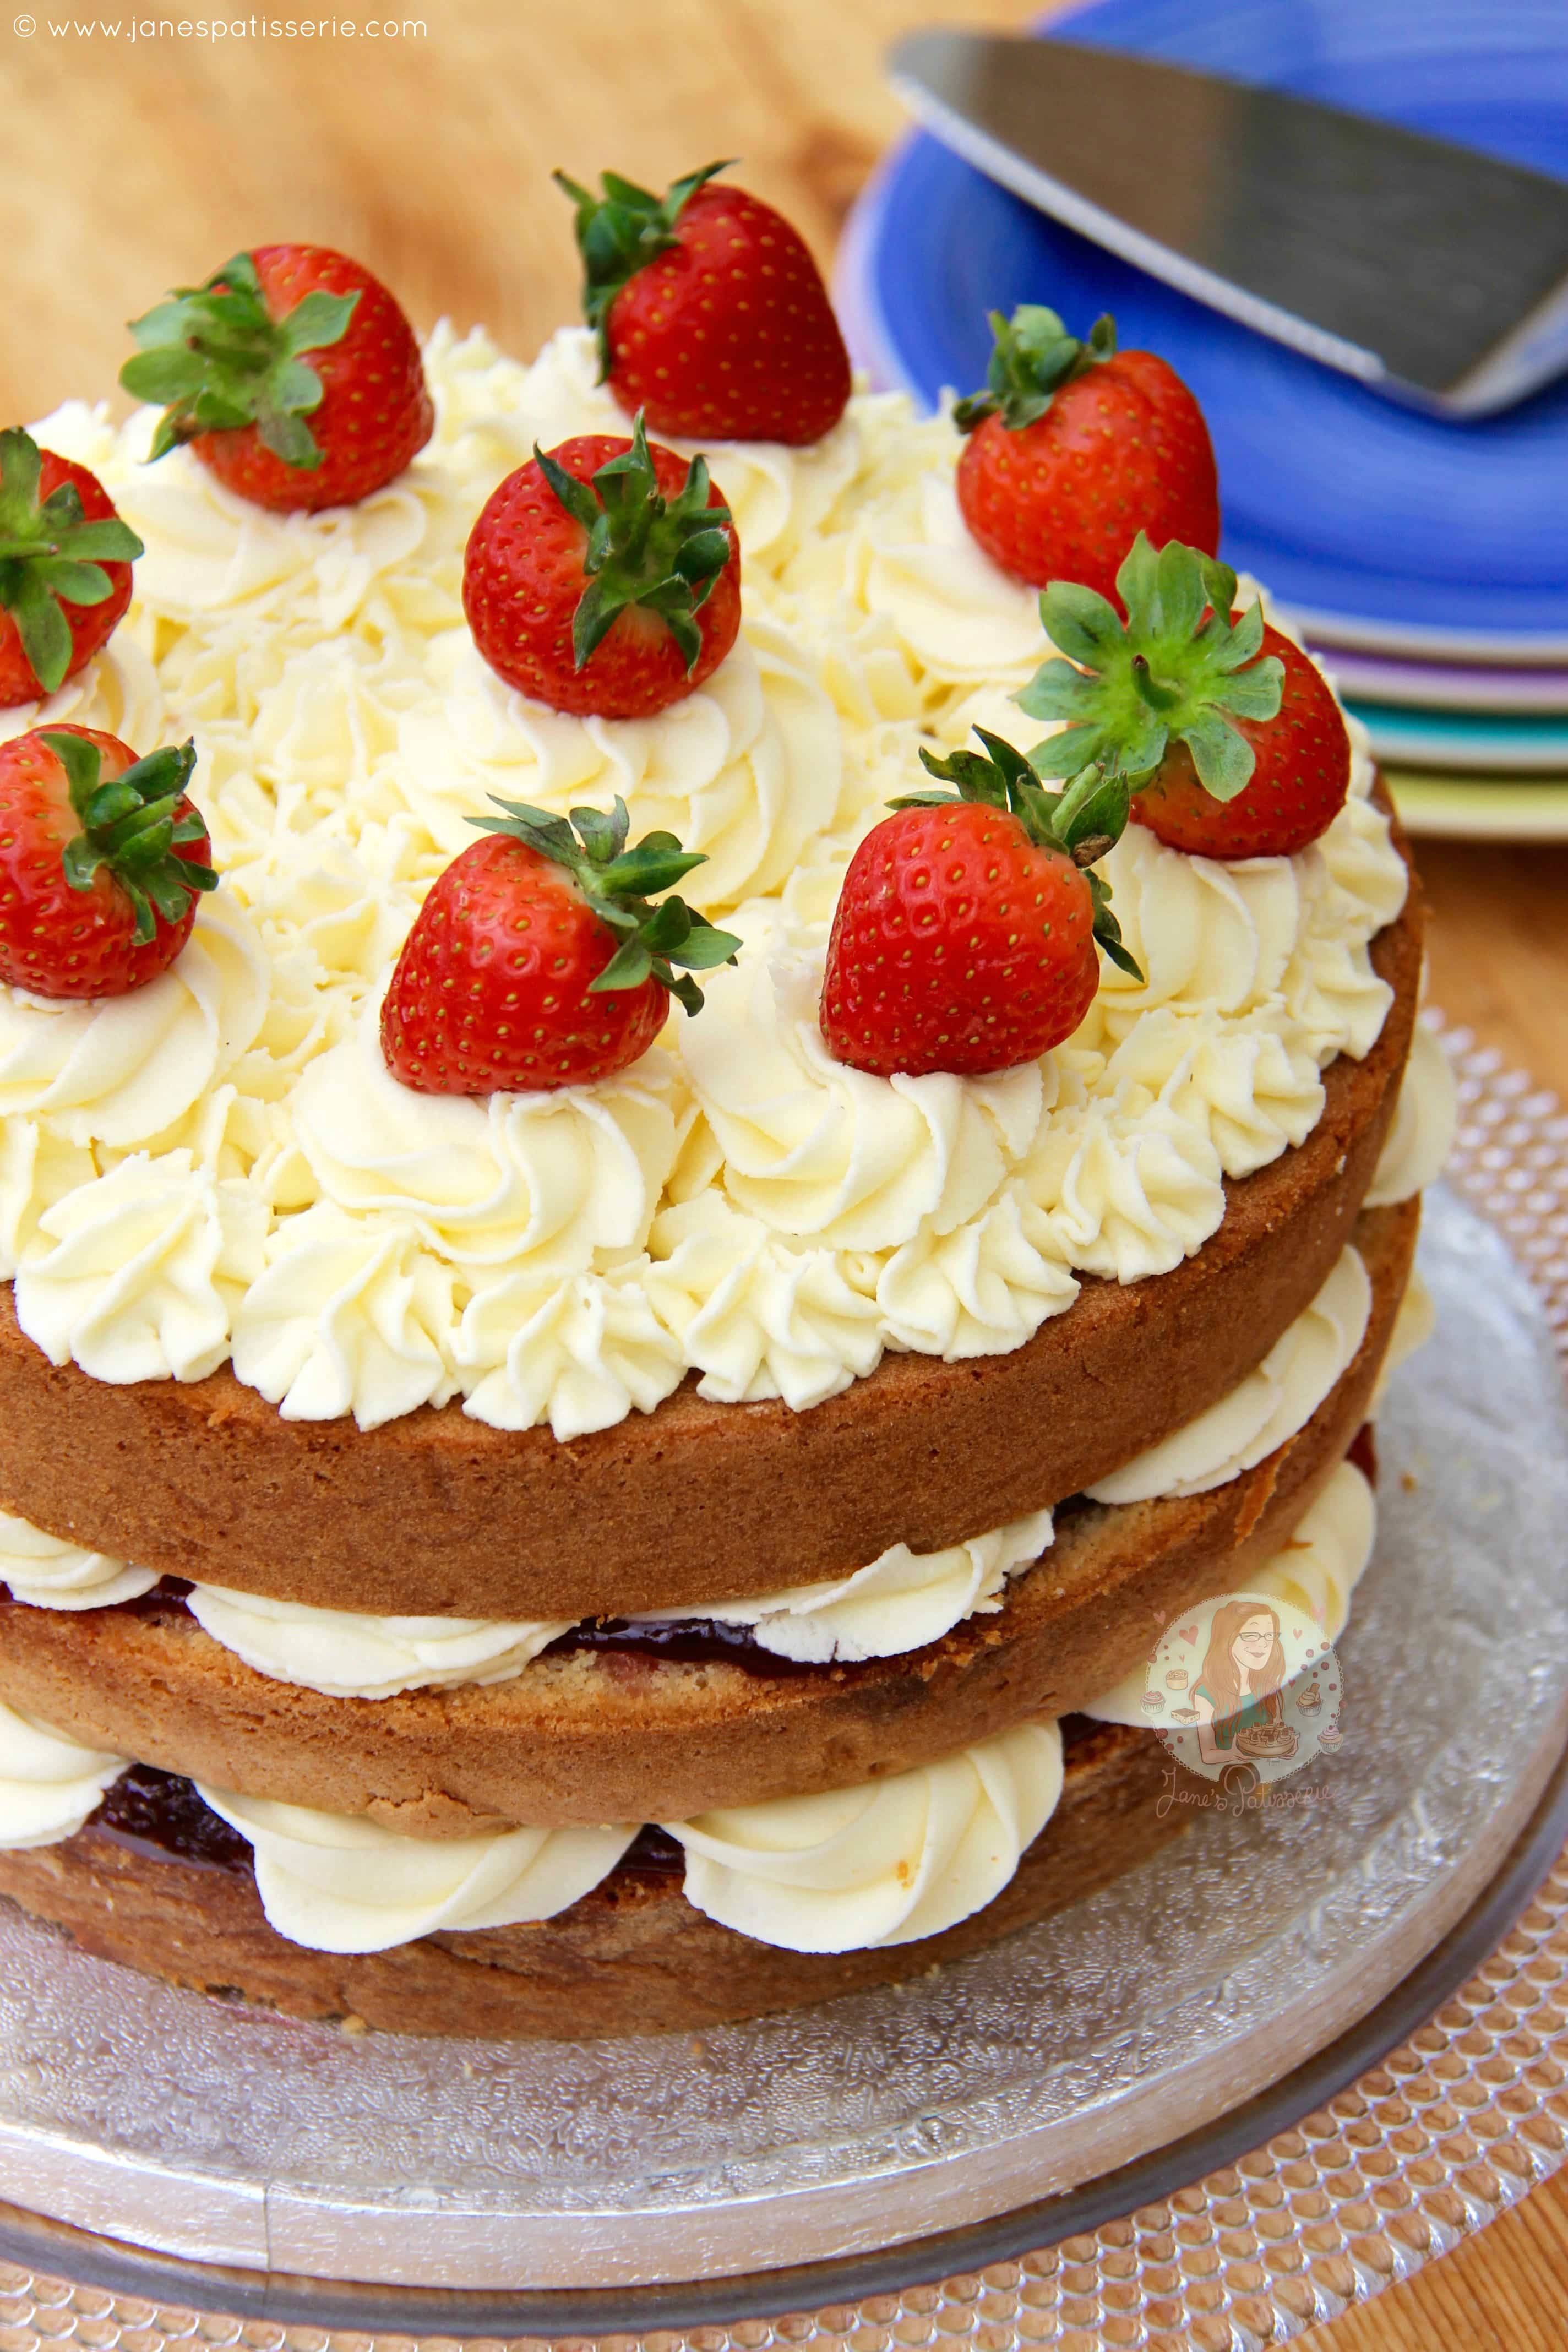 Victoria Sponge - Celebration Cake! - Jane's Patisserie